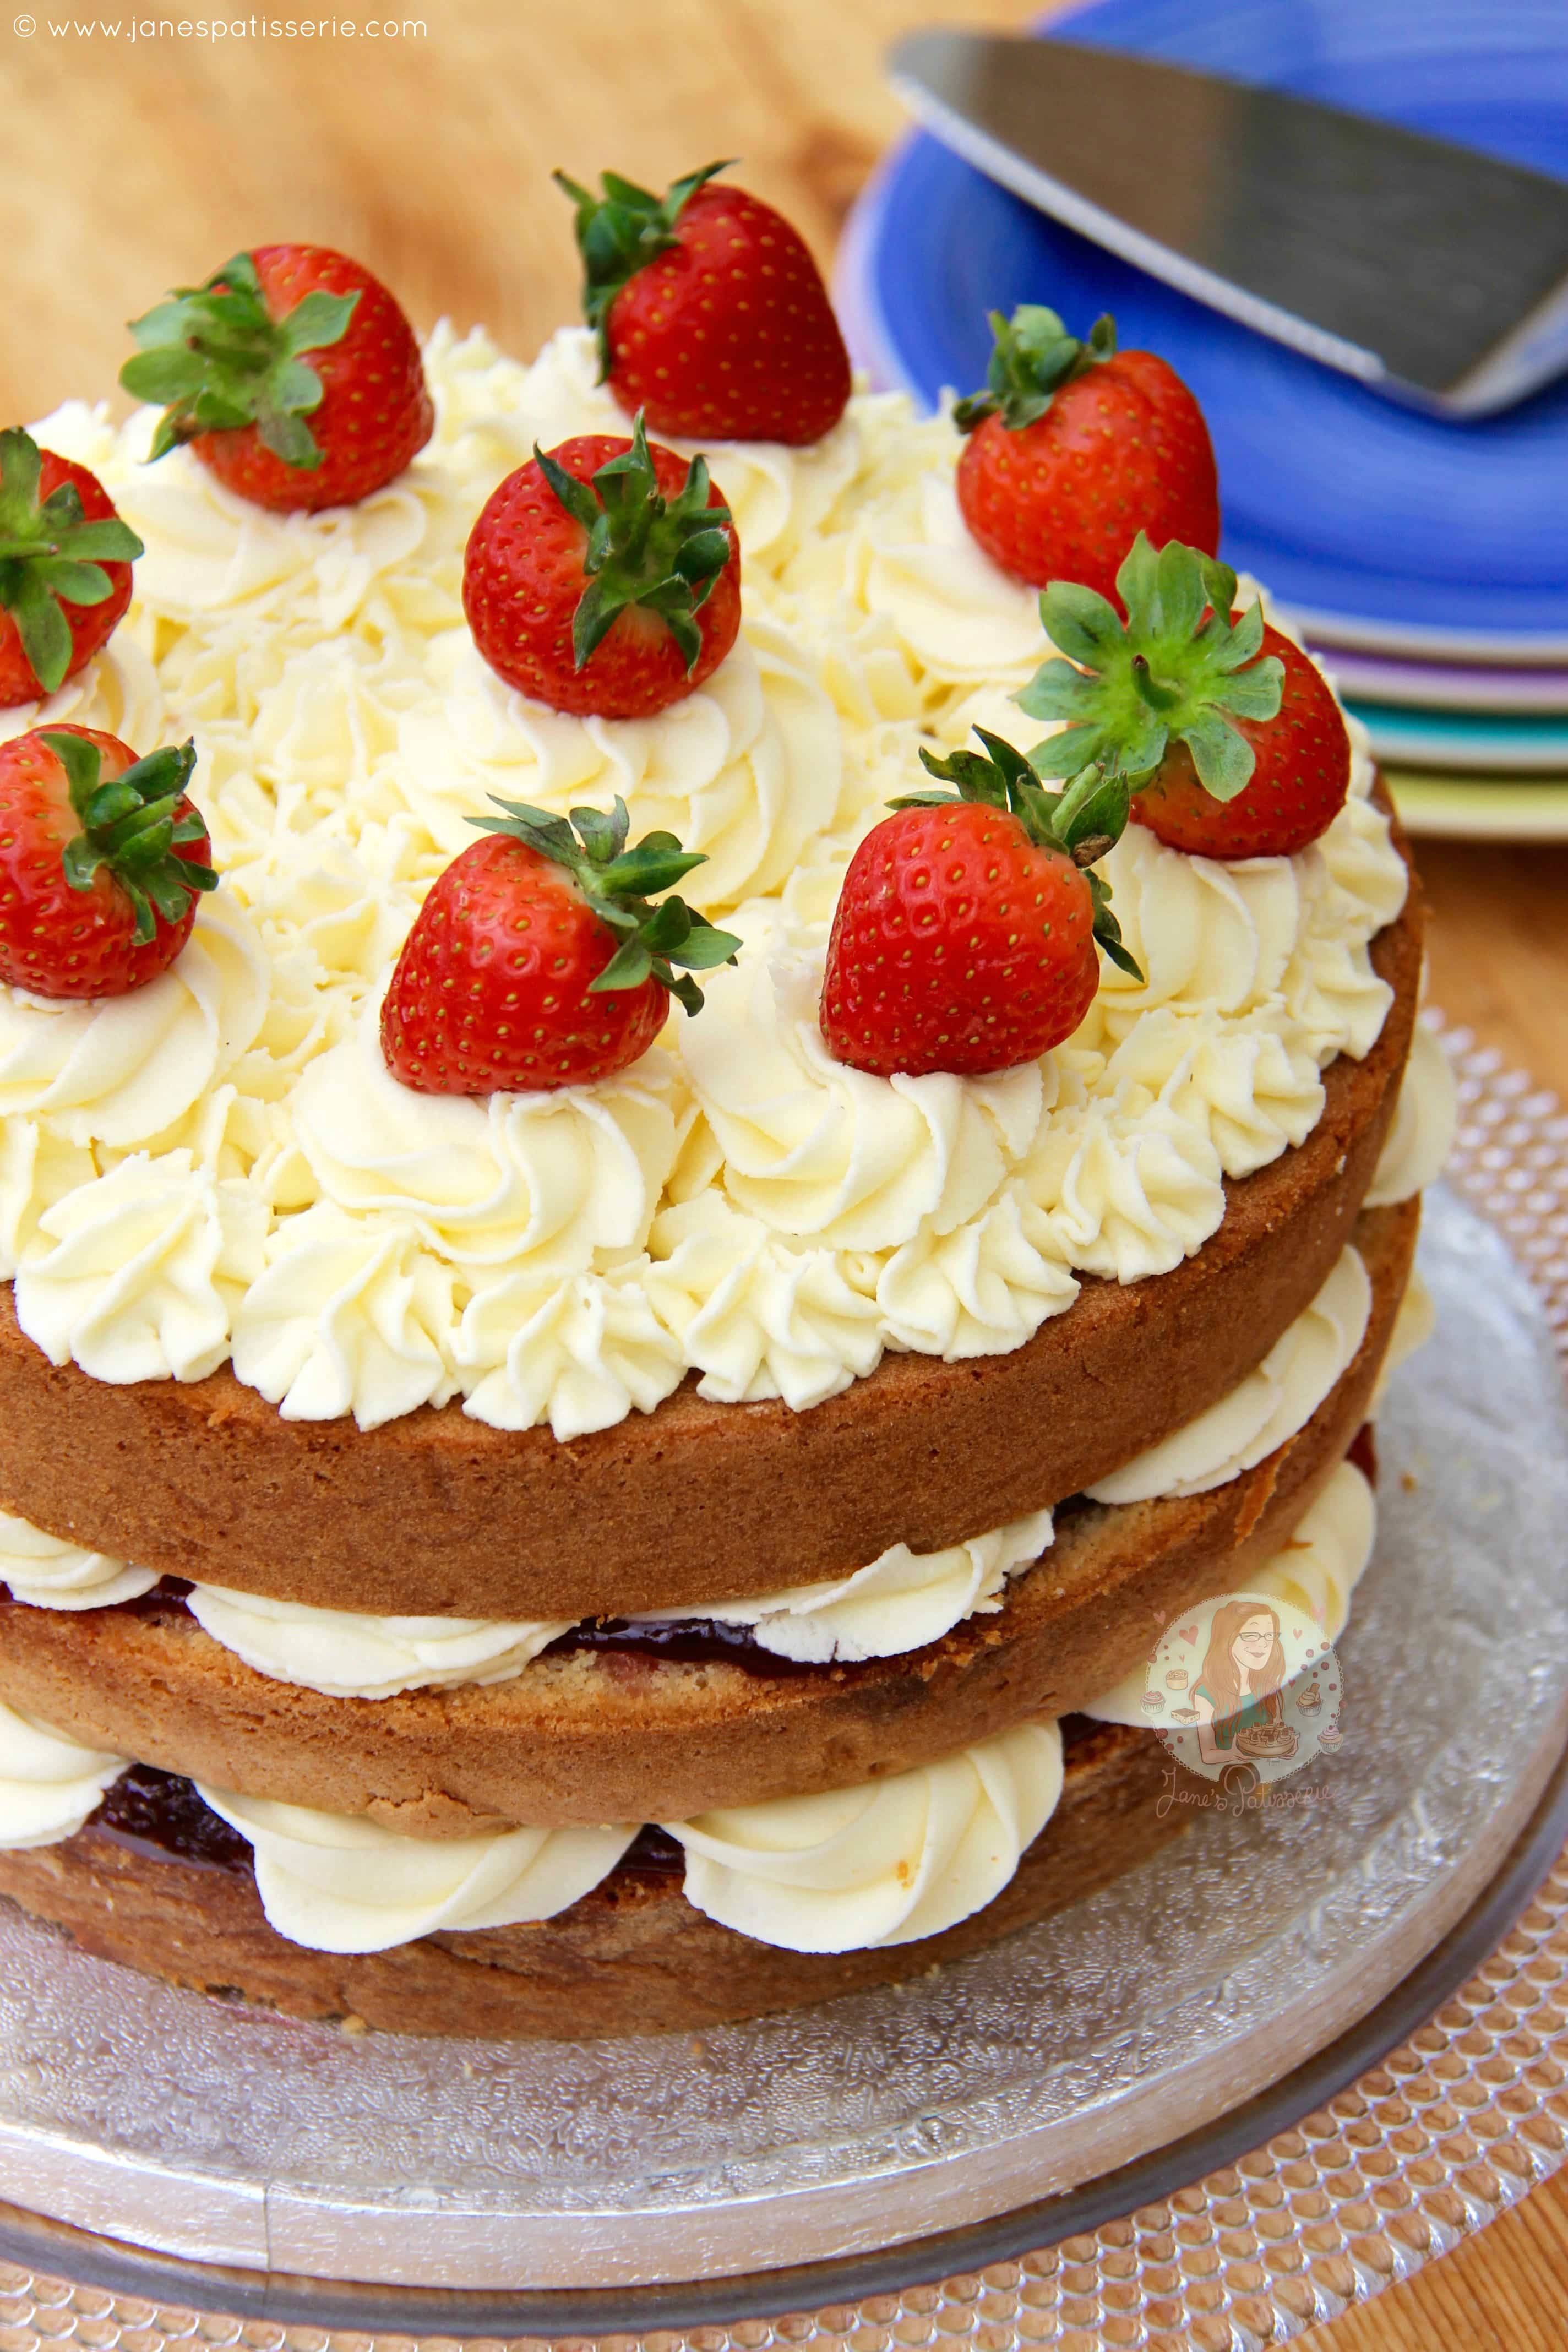 Victoria Sponge - Celebration Cake! - Jane's Patisserie